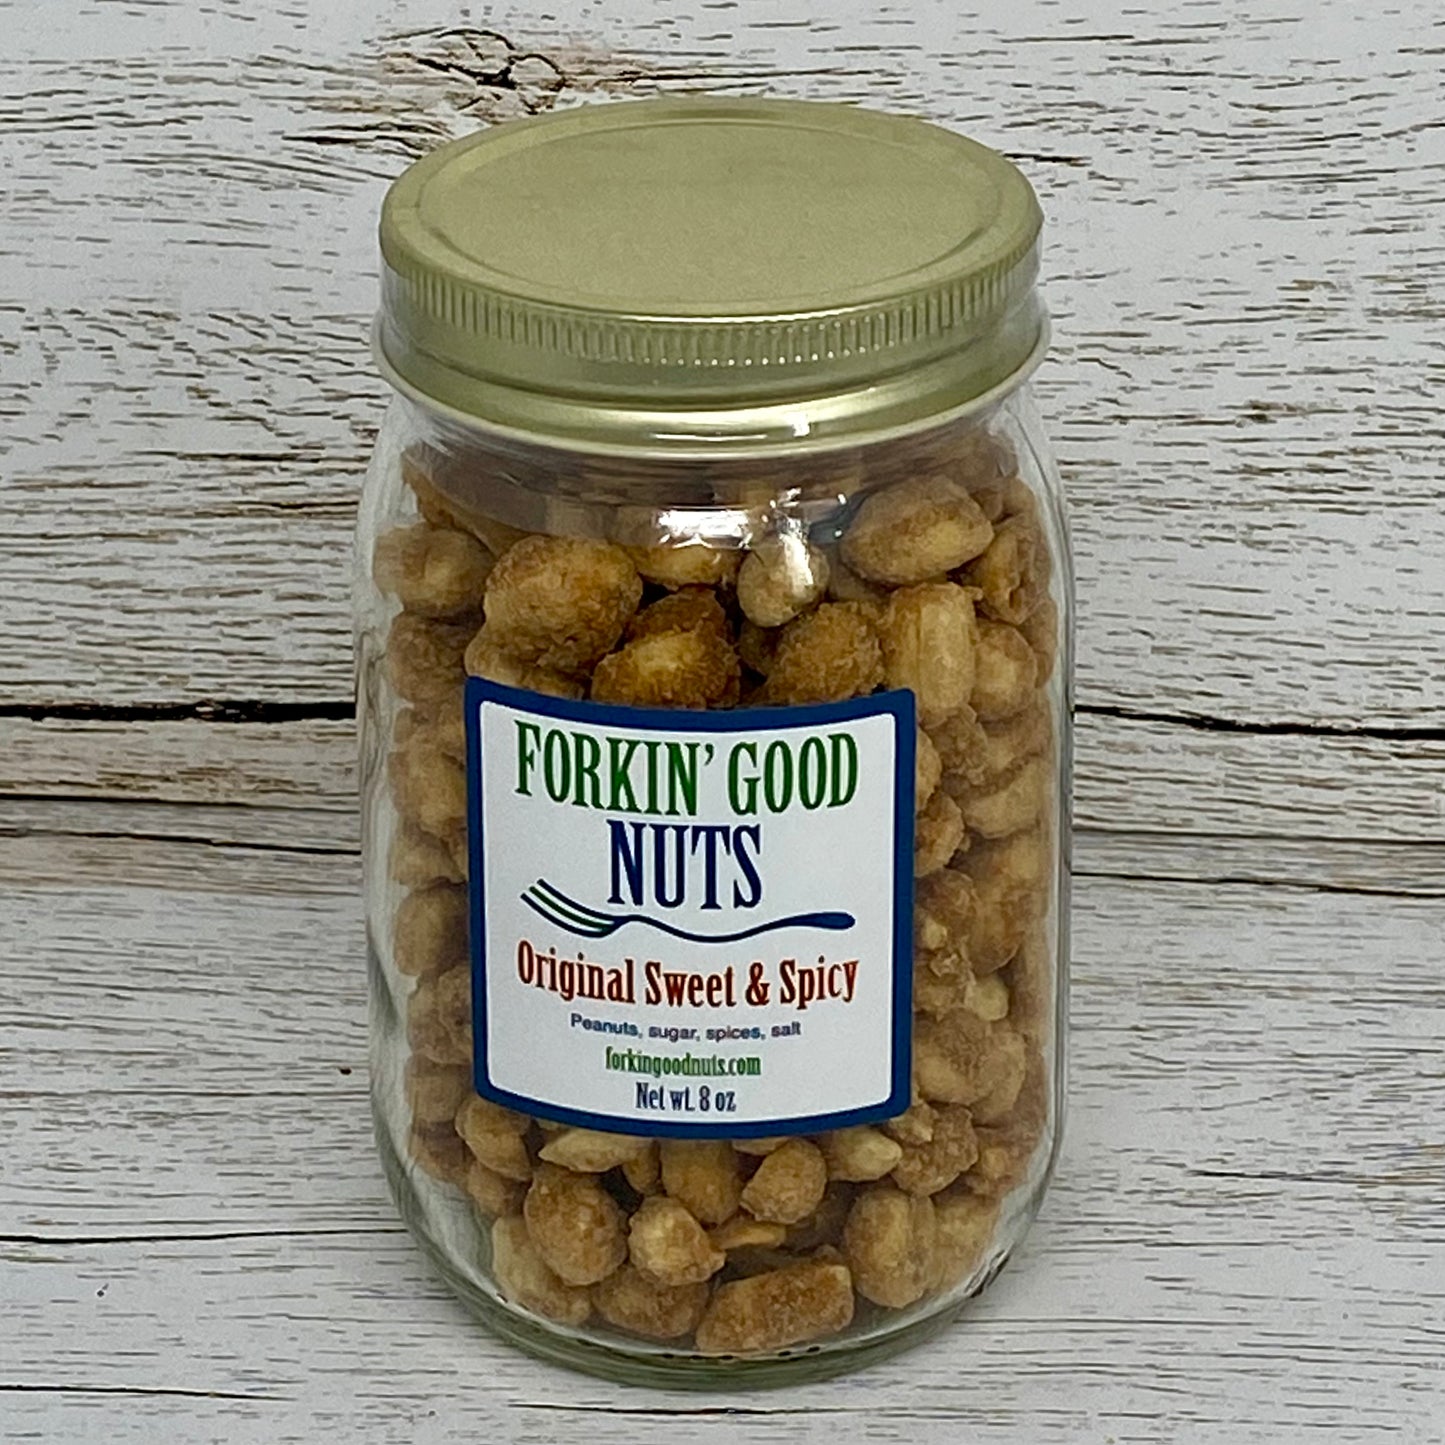 Original Sweet & Spicy Flavored Nuts